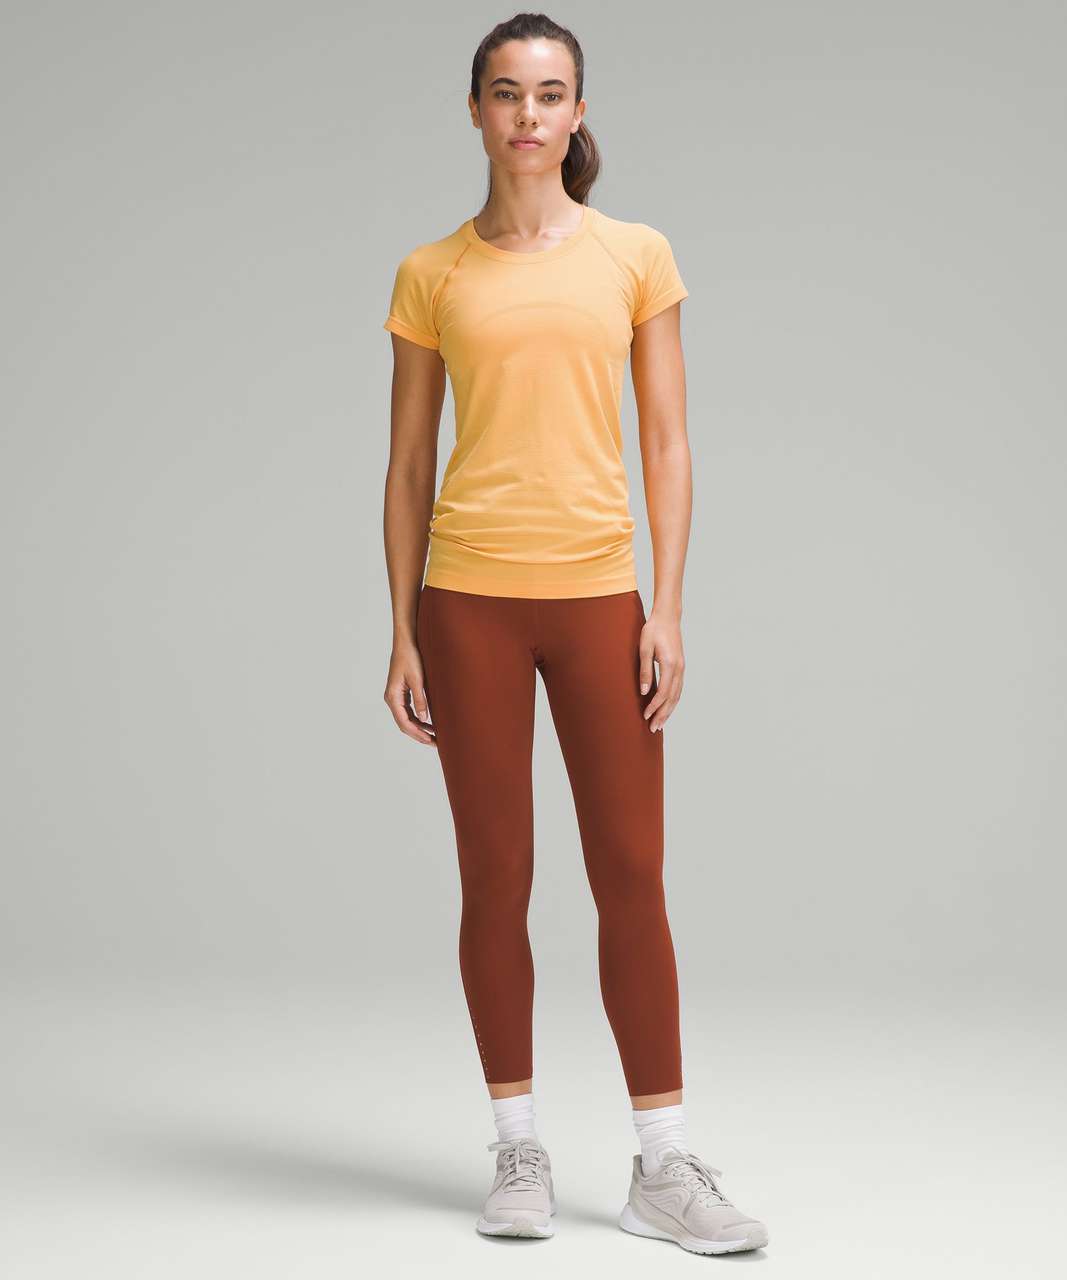 Lululemon Swiftly Tech Short-Sleeve Shirt 2.0 - Mango Dream / Mango Dream